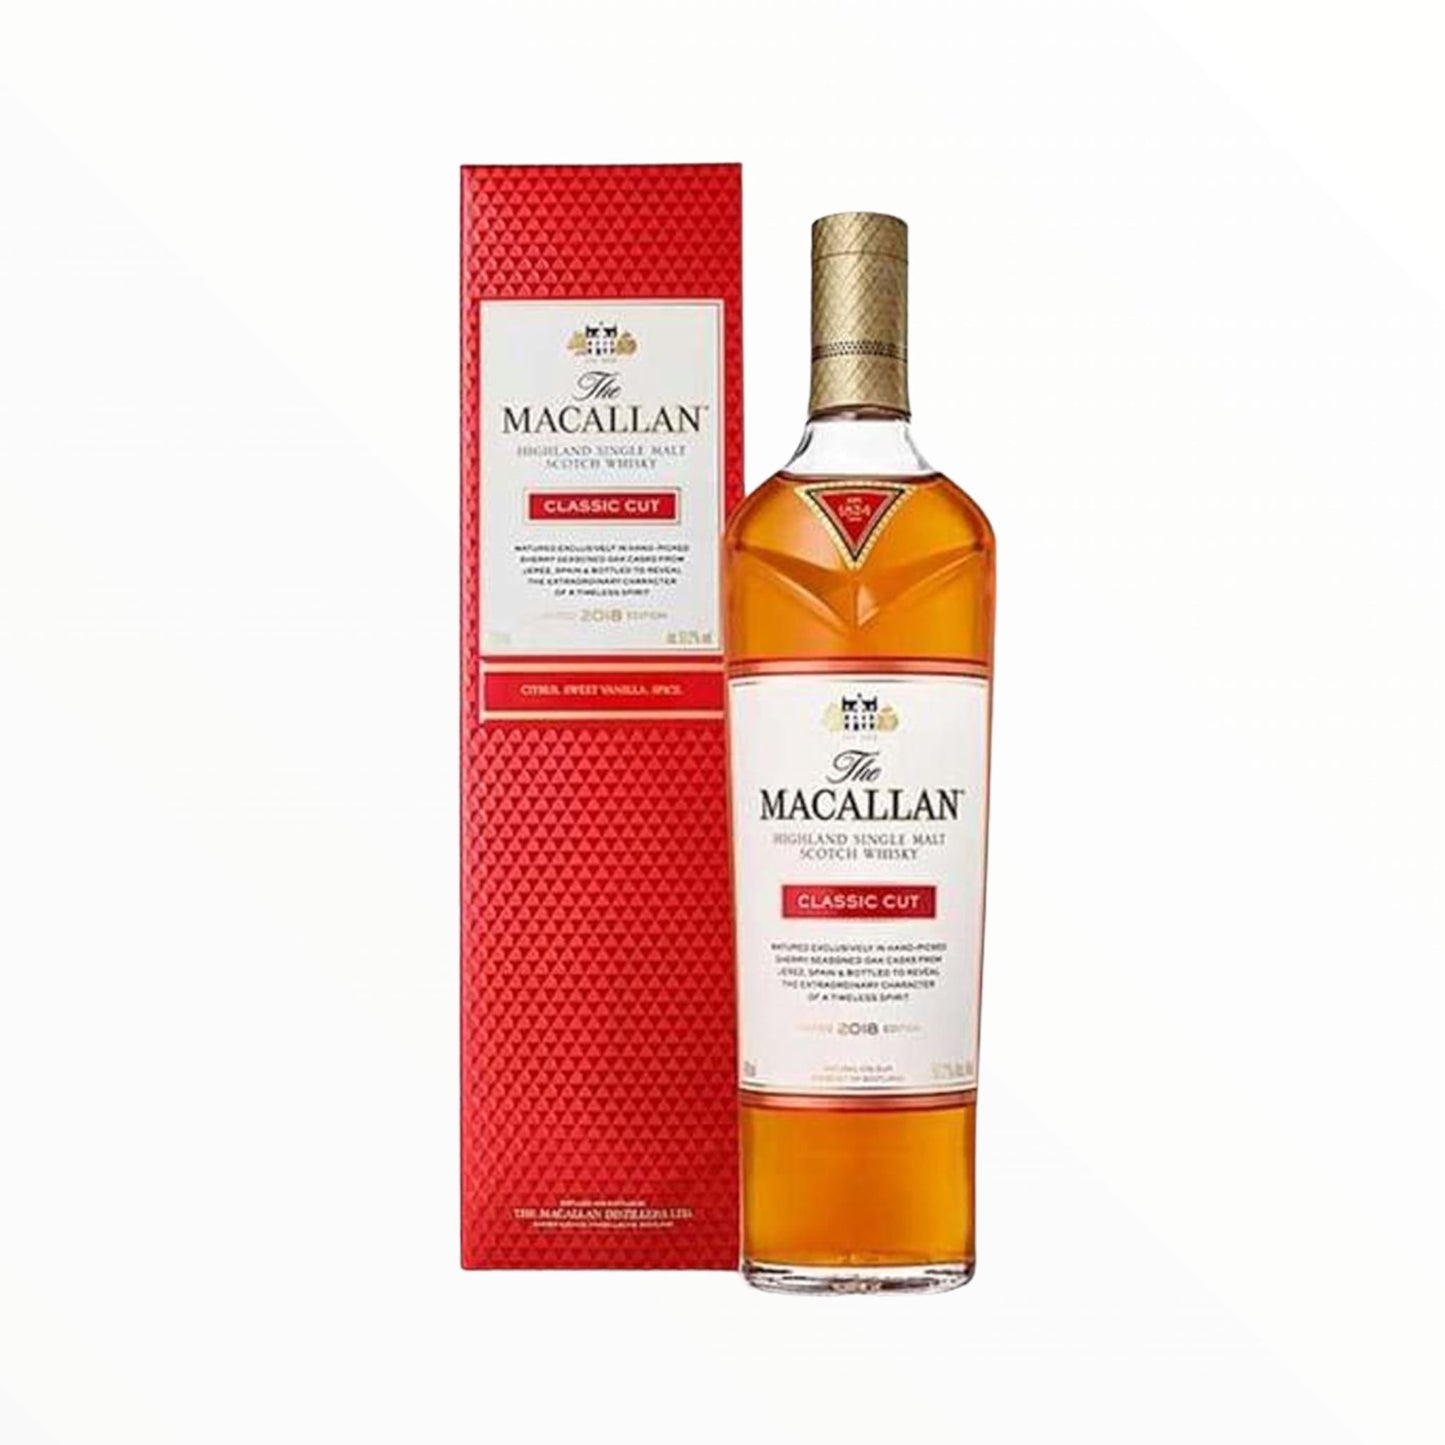 The Macallan Classic Cut Single Malt Scotch Whisky 700ml - 2018 Release